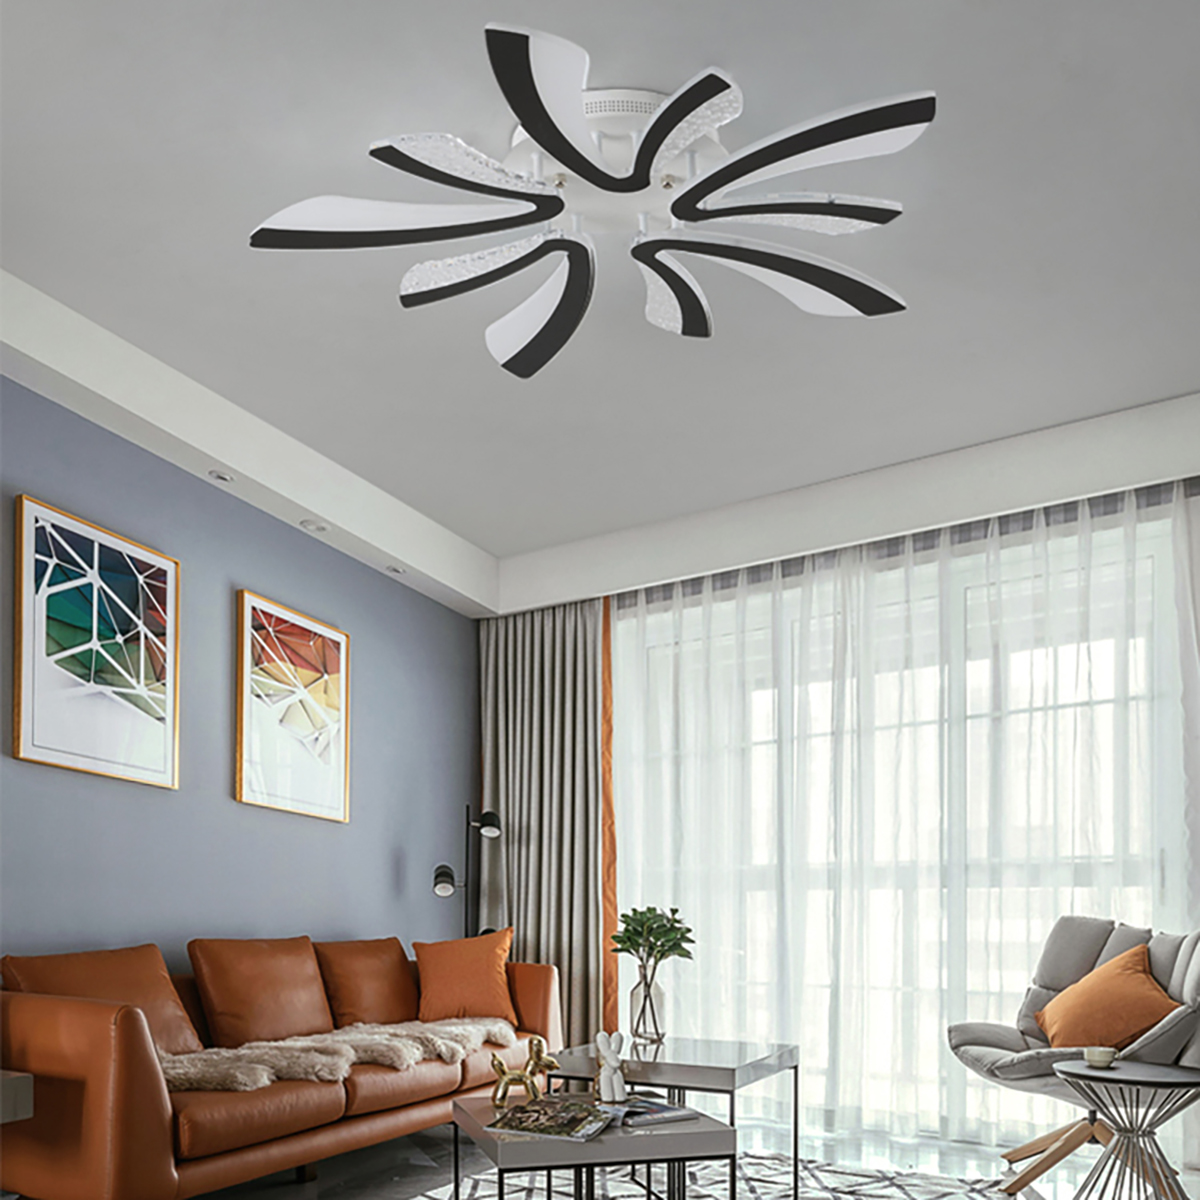 2440W-85V-265V-LED-Ceiling-Light-Pendant-Lamp-Dimmable-Remote-Hallway-Living-Room-Fixture-Decor-1745018-3